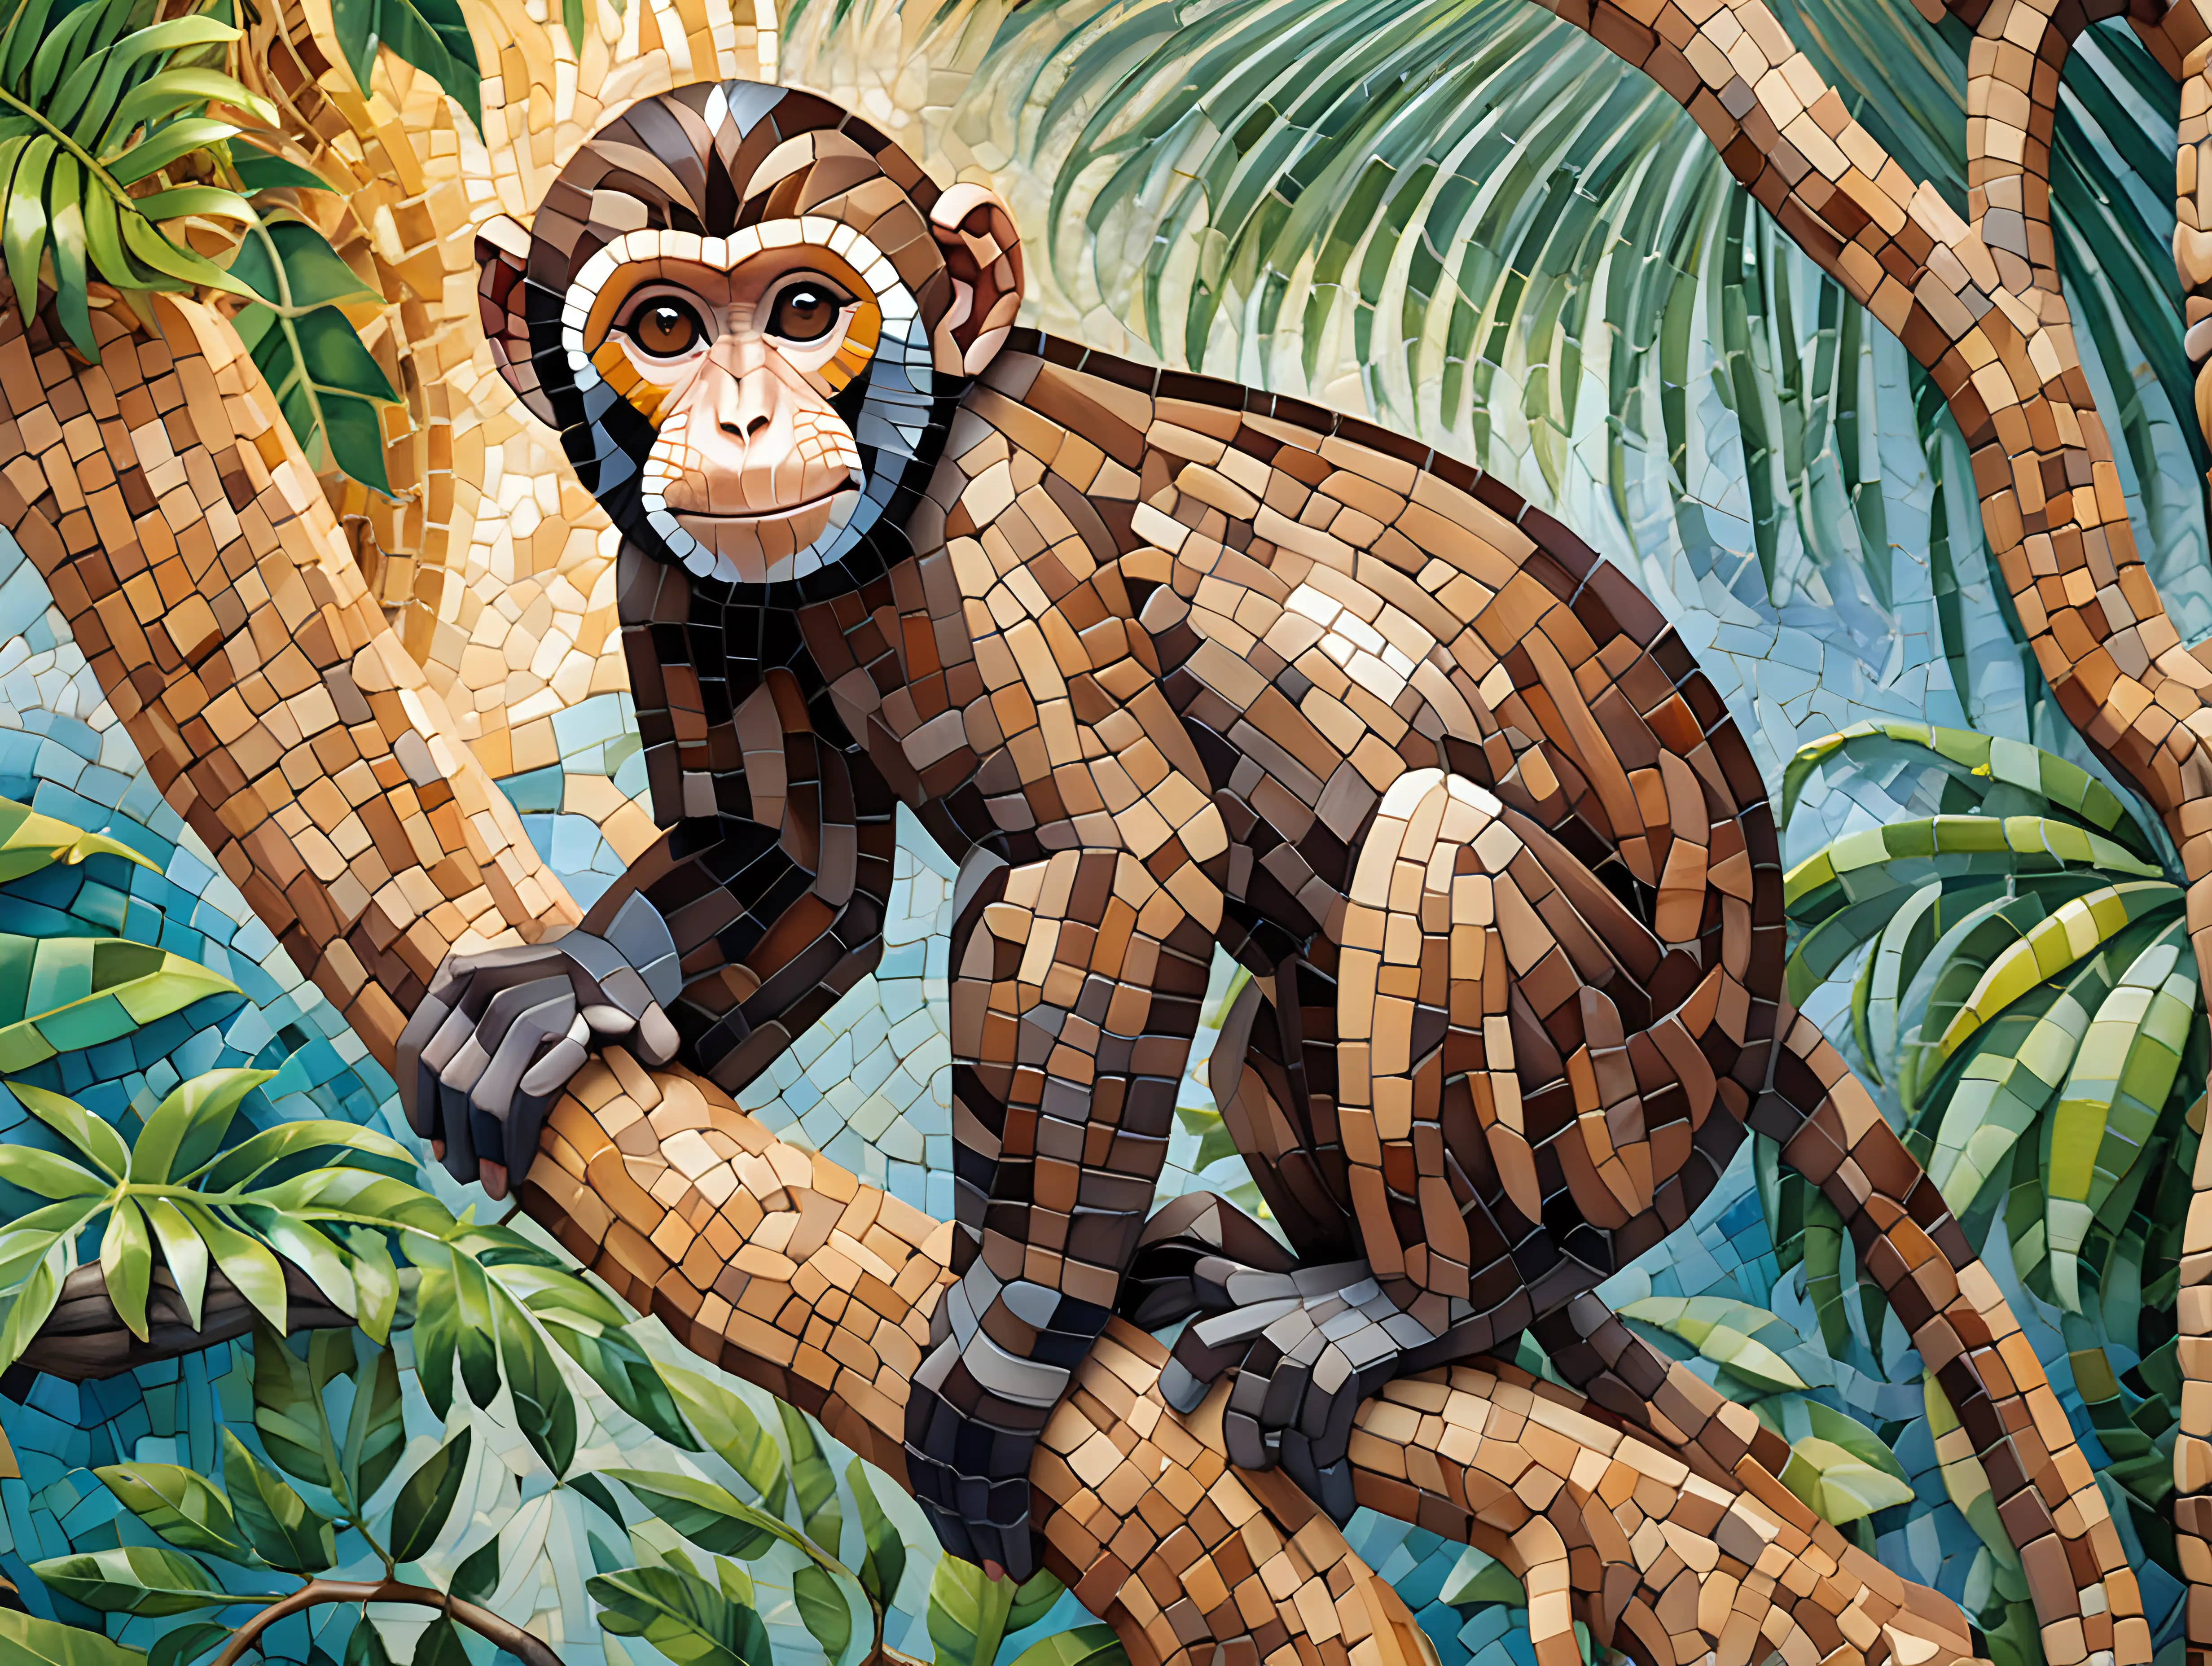 Vibrant Jungle Mosaic Puzzle Featuring a Playful Capuchin Monkey